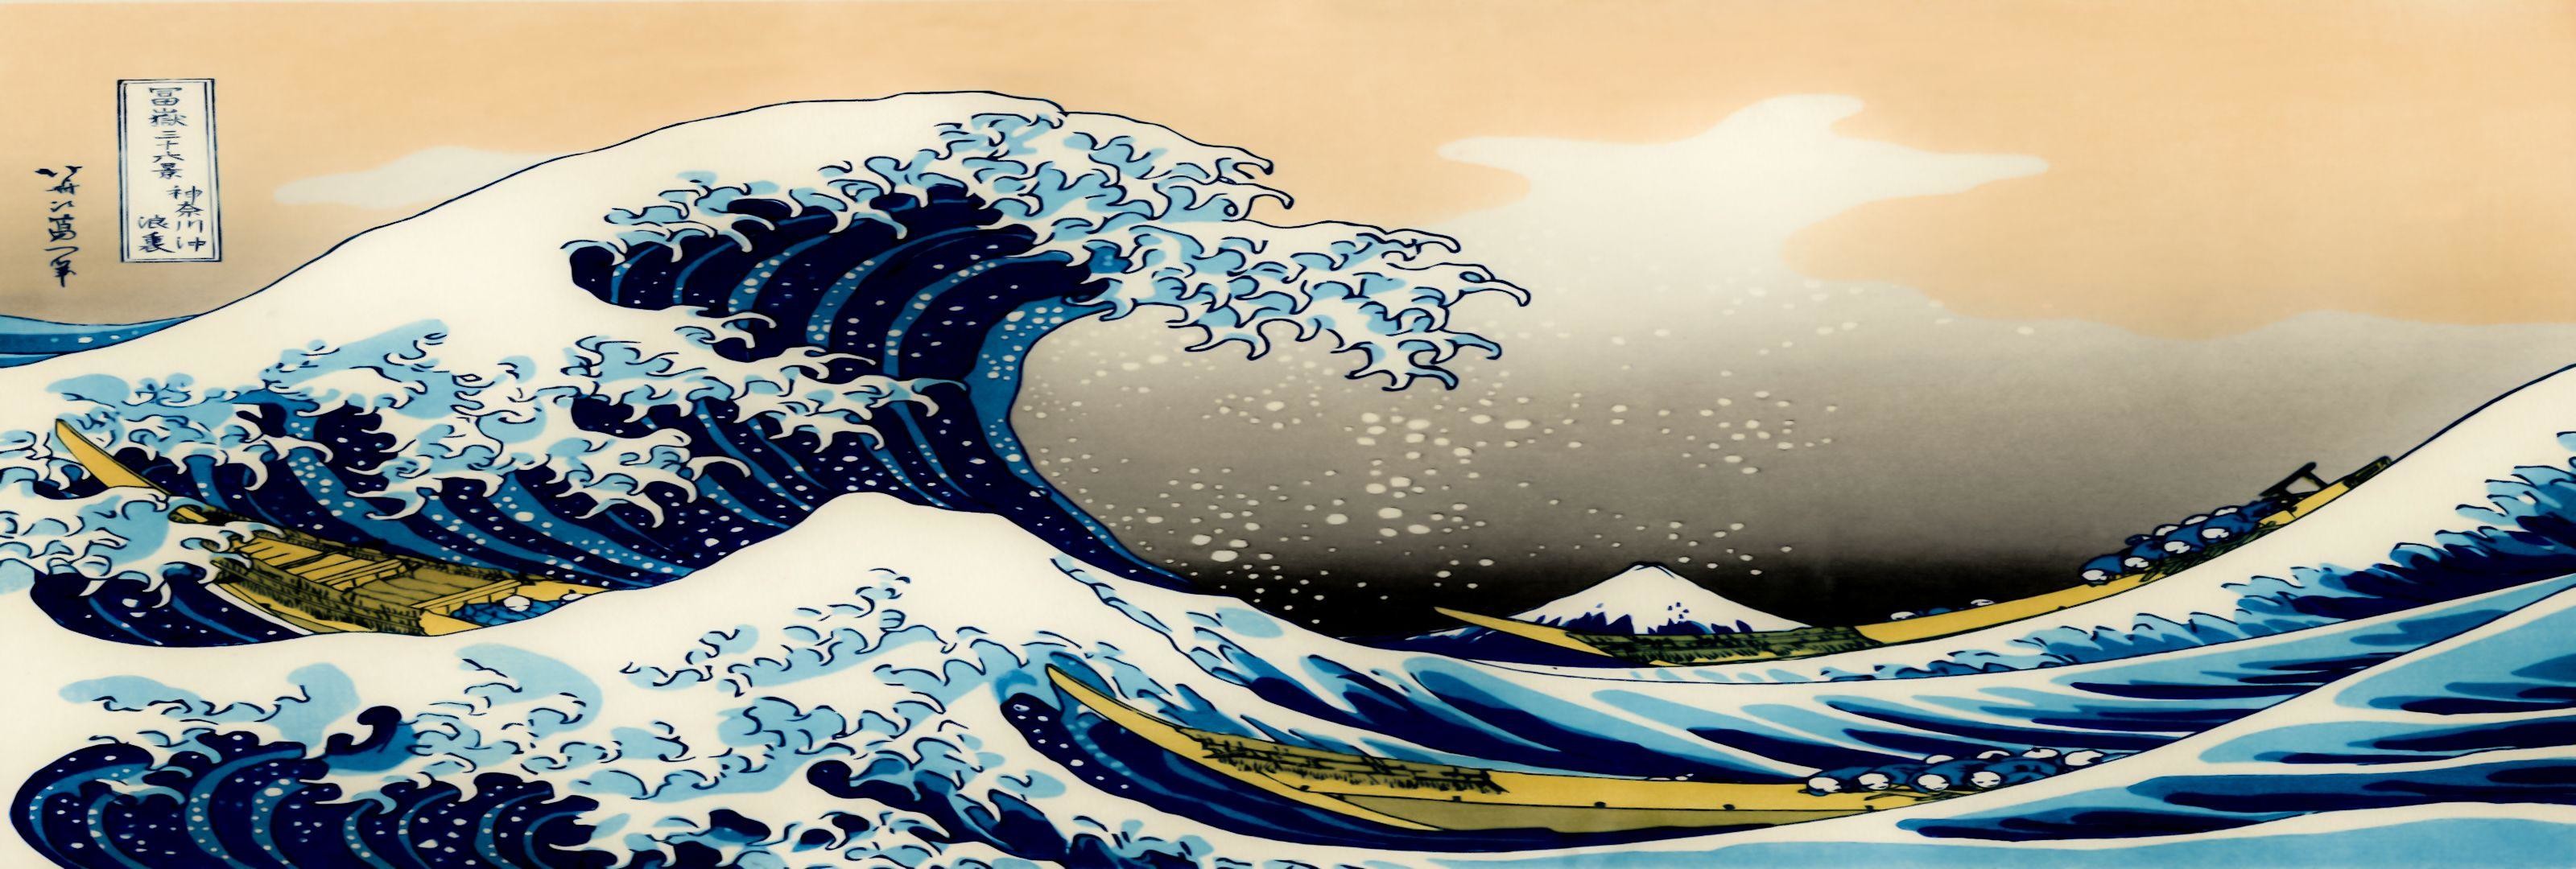 Great Wave off Kanagawa Wallpaper (48+ images)